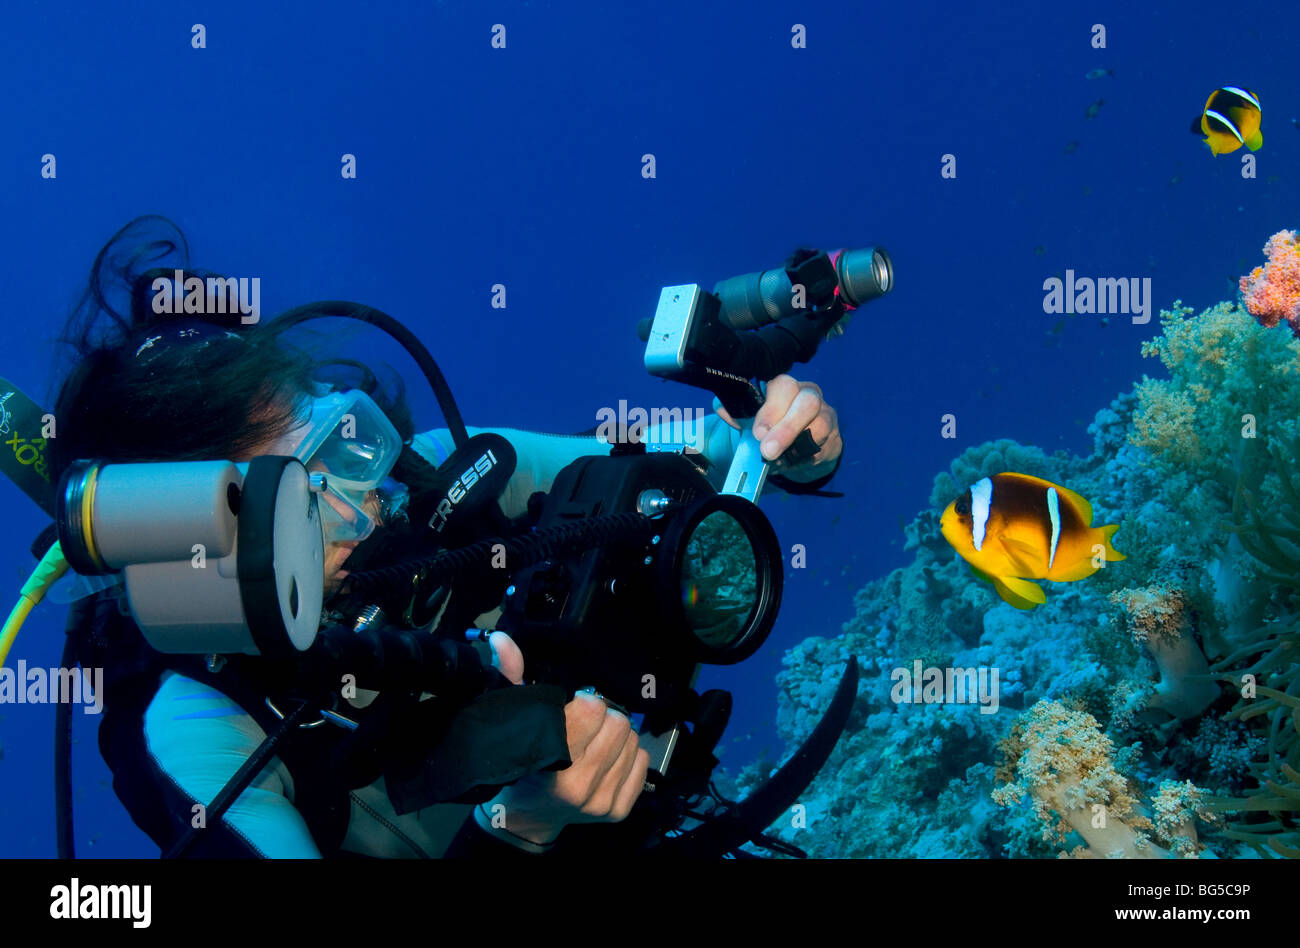 Underwater photographer scuba diving, ras mohammed, national park, Egypt, anemone fish, anemone, photographer, scuba, ocean Stock Photo